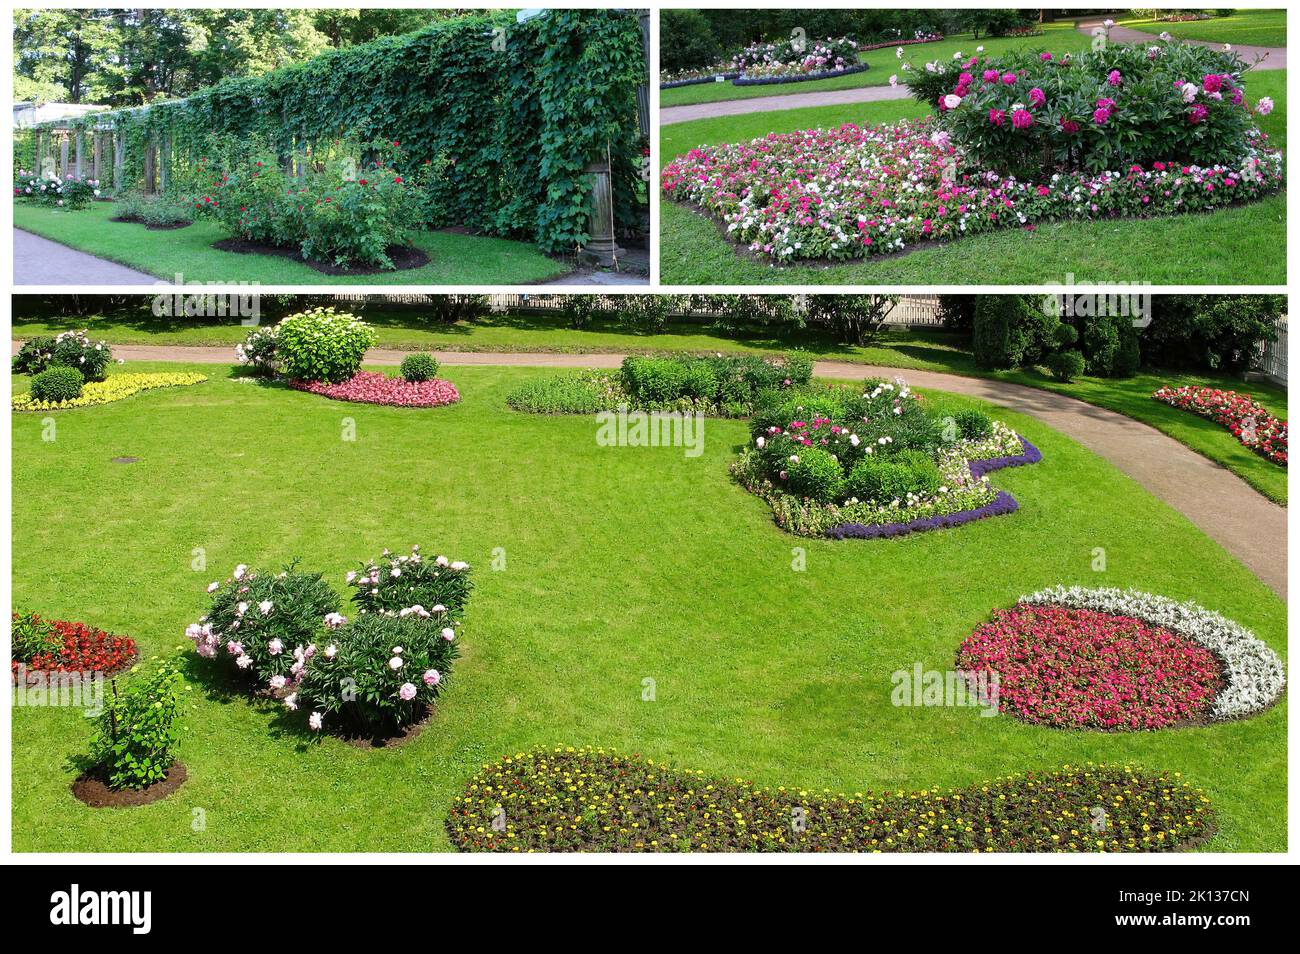 The Beautiful and Lush Park surrounding Catherine Palace, located in the town of Tsarskoye Selo (Pushkin), St. Petersburg, Russia Stock Photo